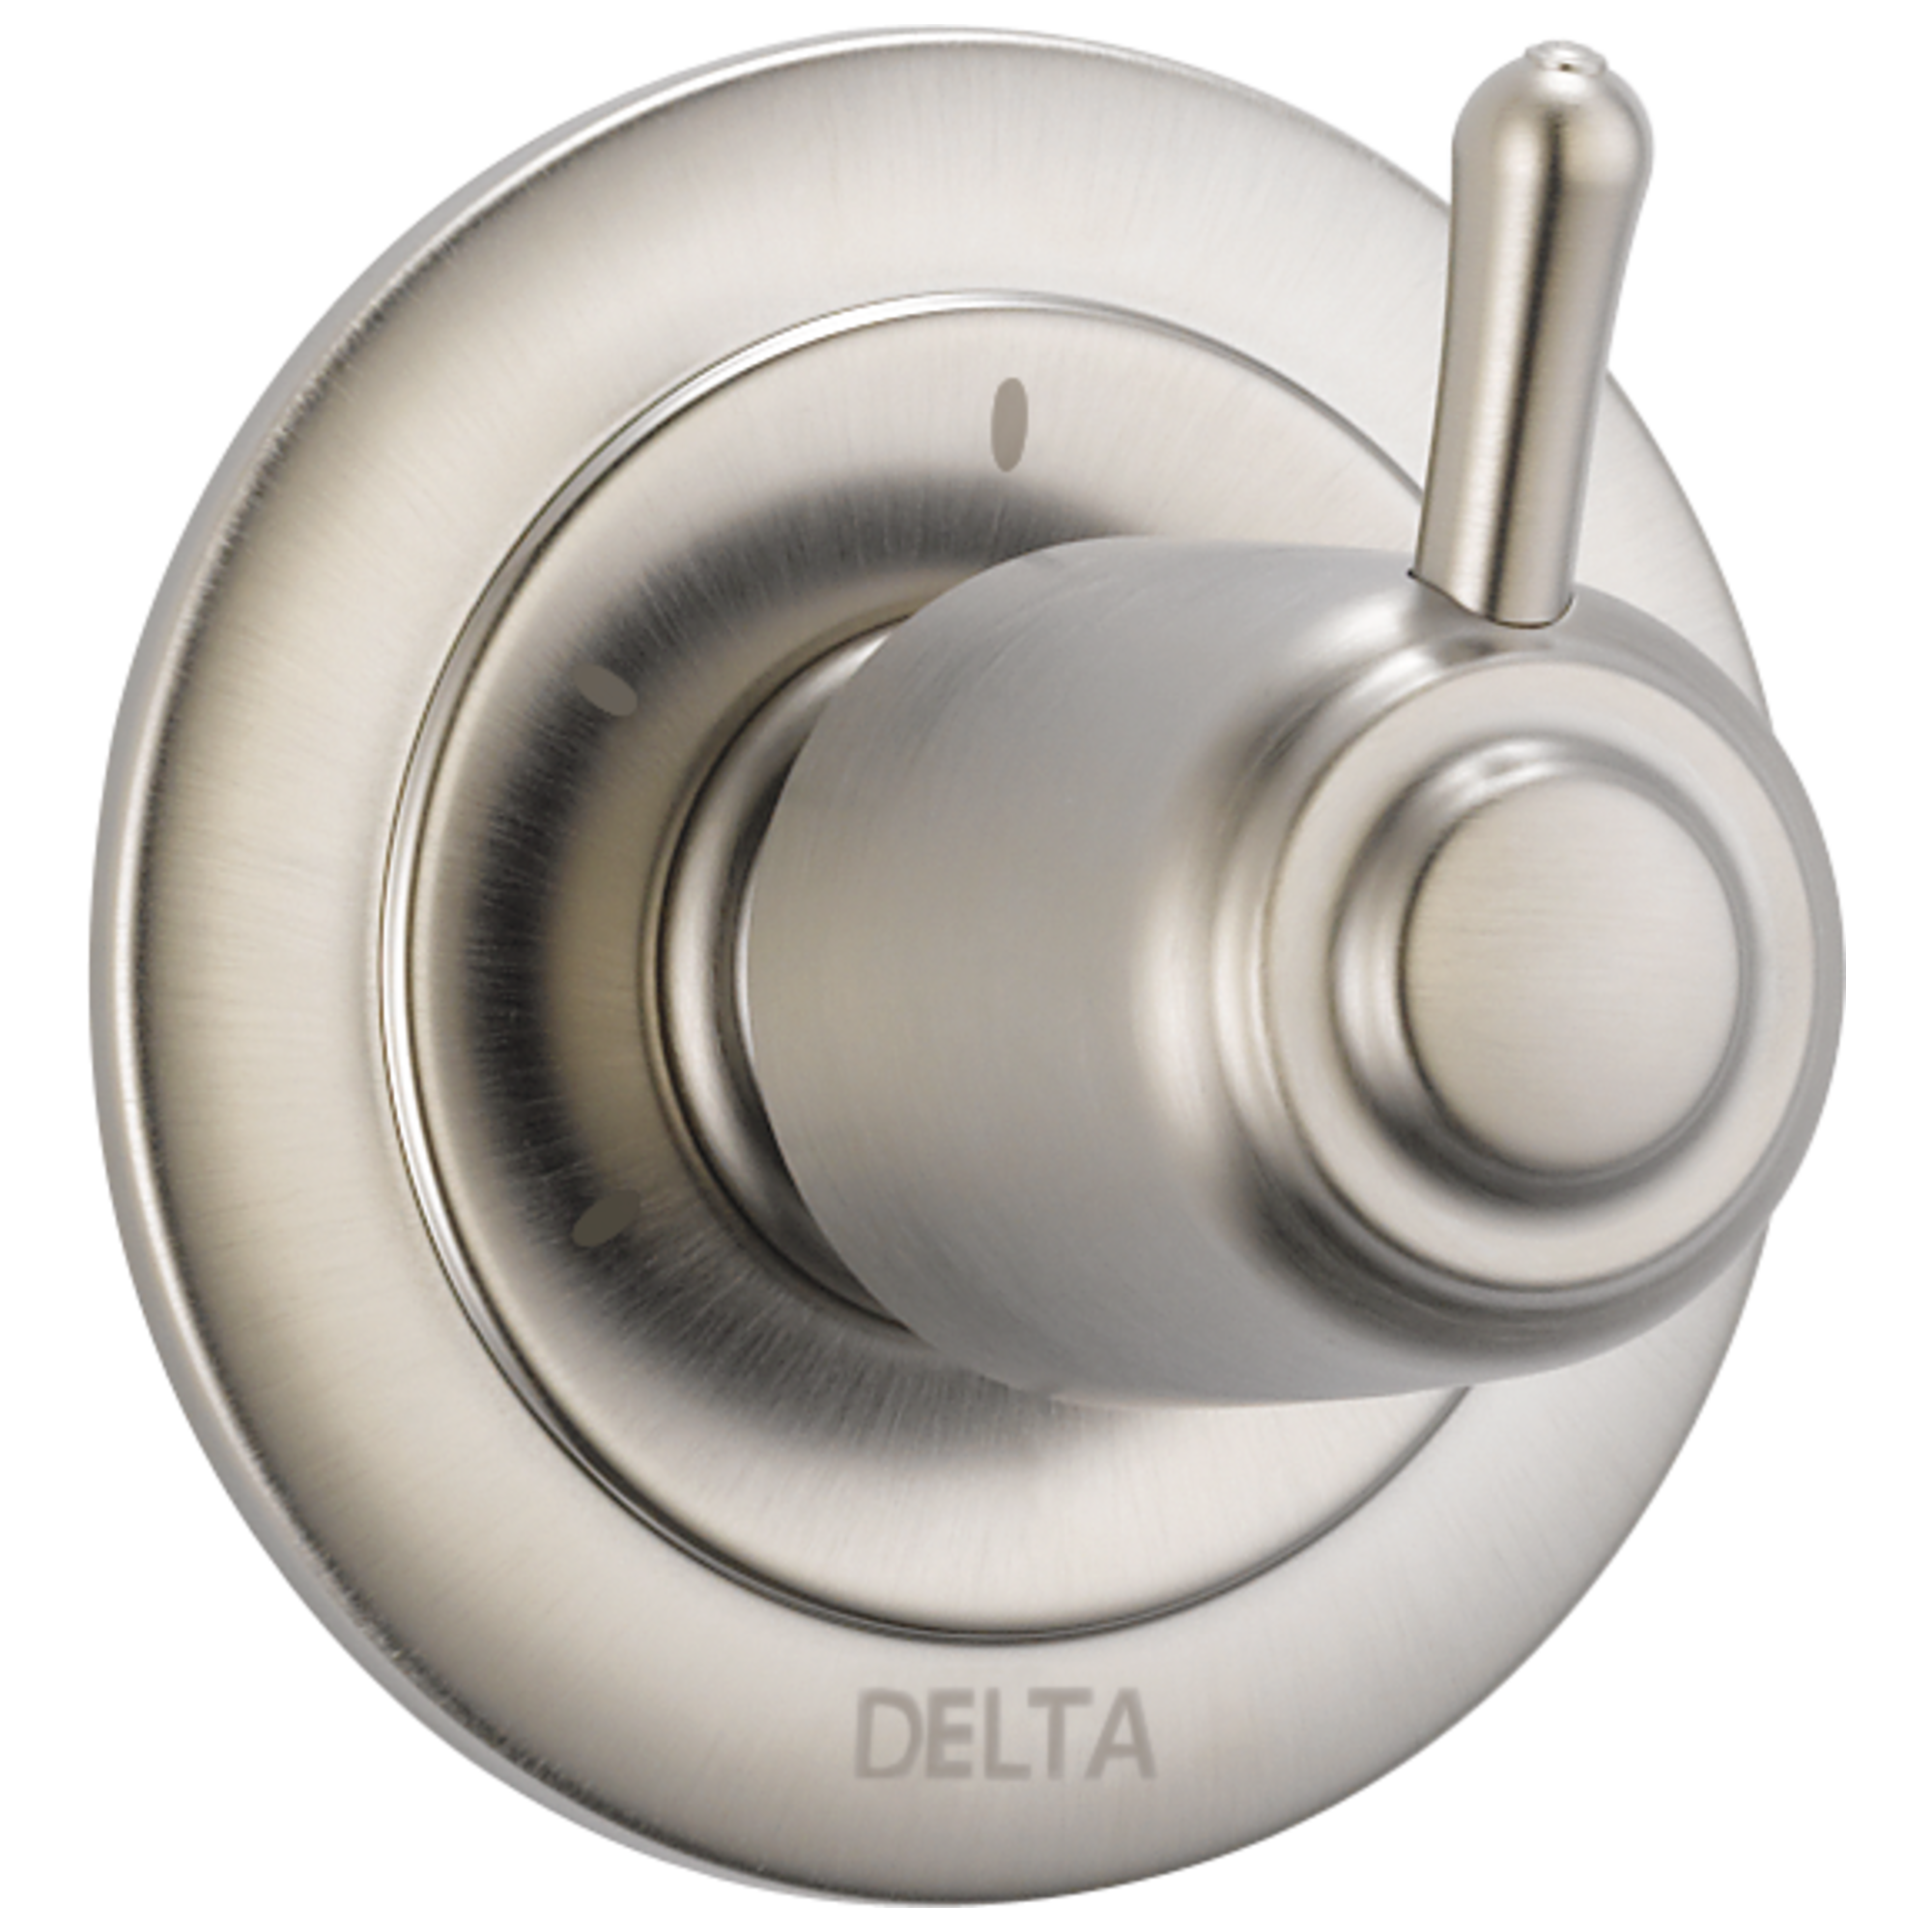 Delta 3-setting 2-port Diverter Trim 1458559